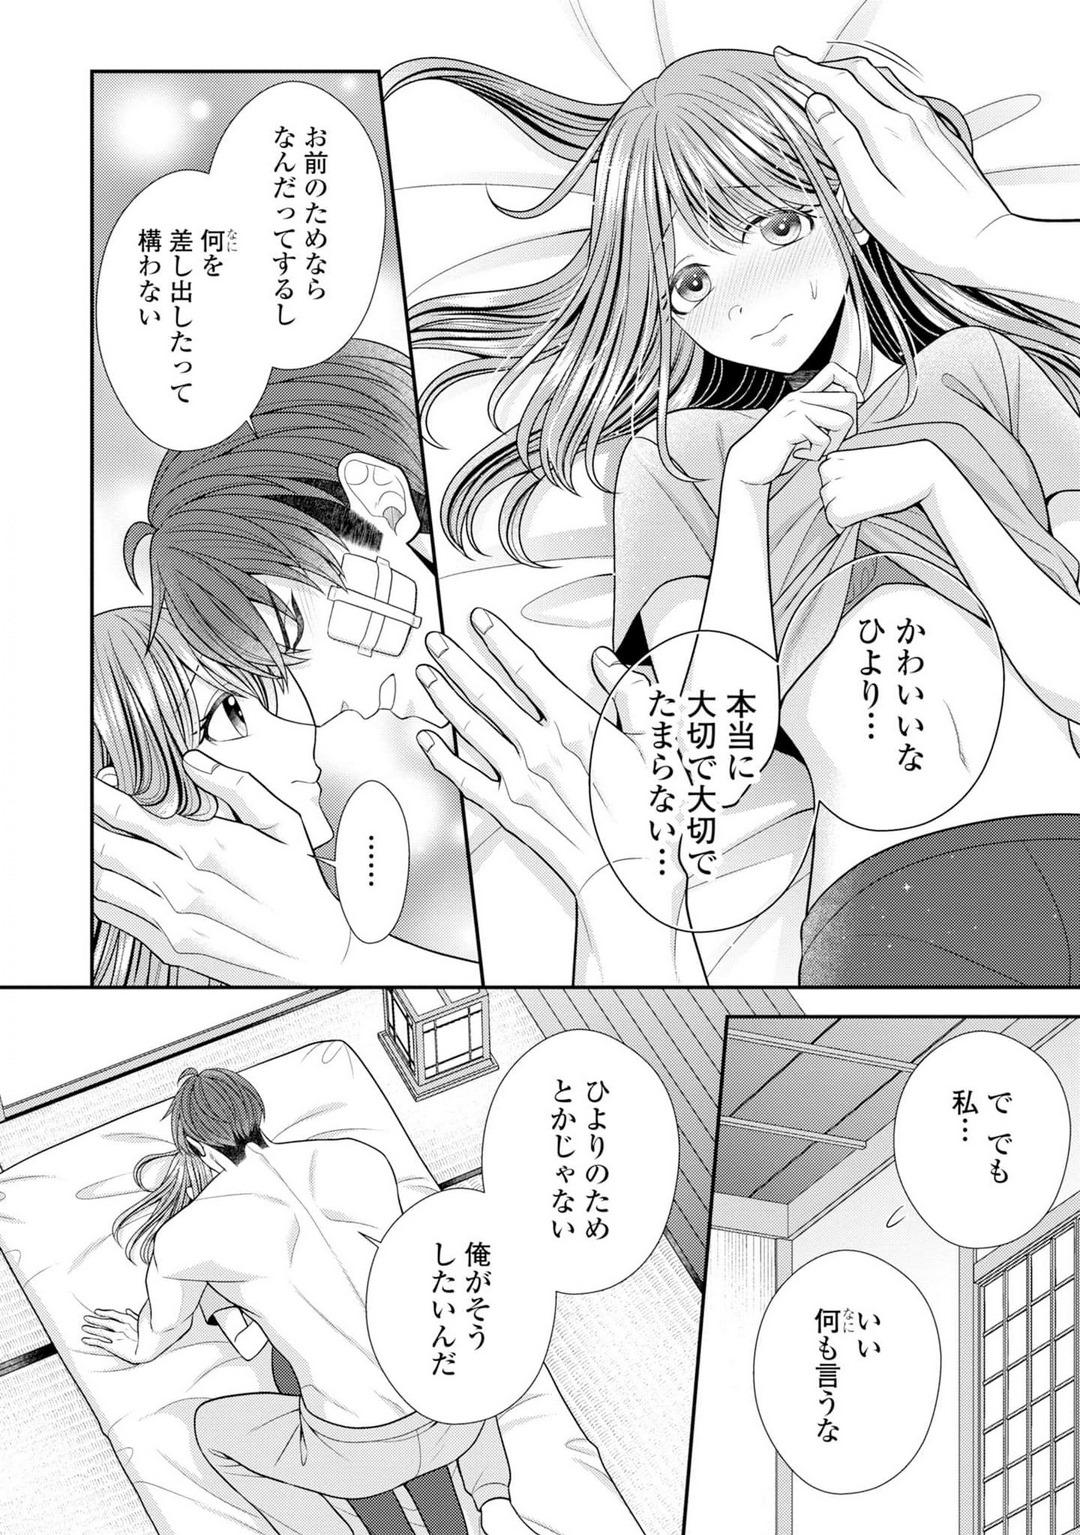 Erotic Sono Keisatsukan, Tokidoki Yajuu! 40 Kinky - Page 3